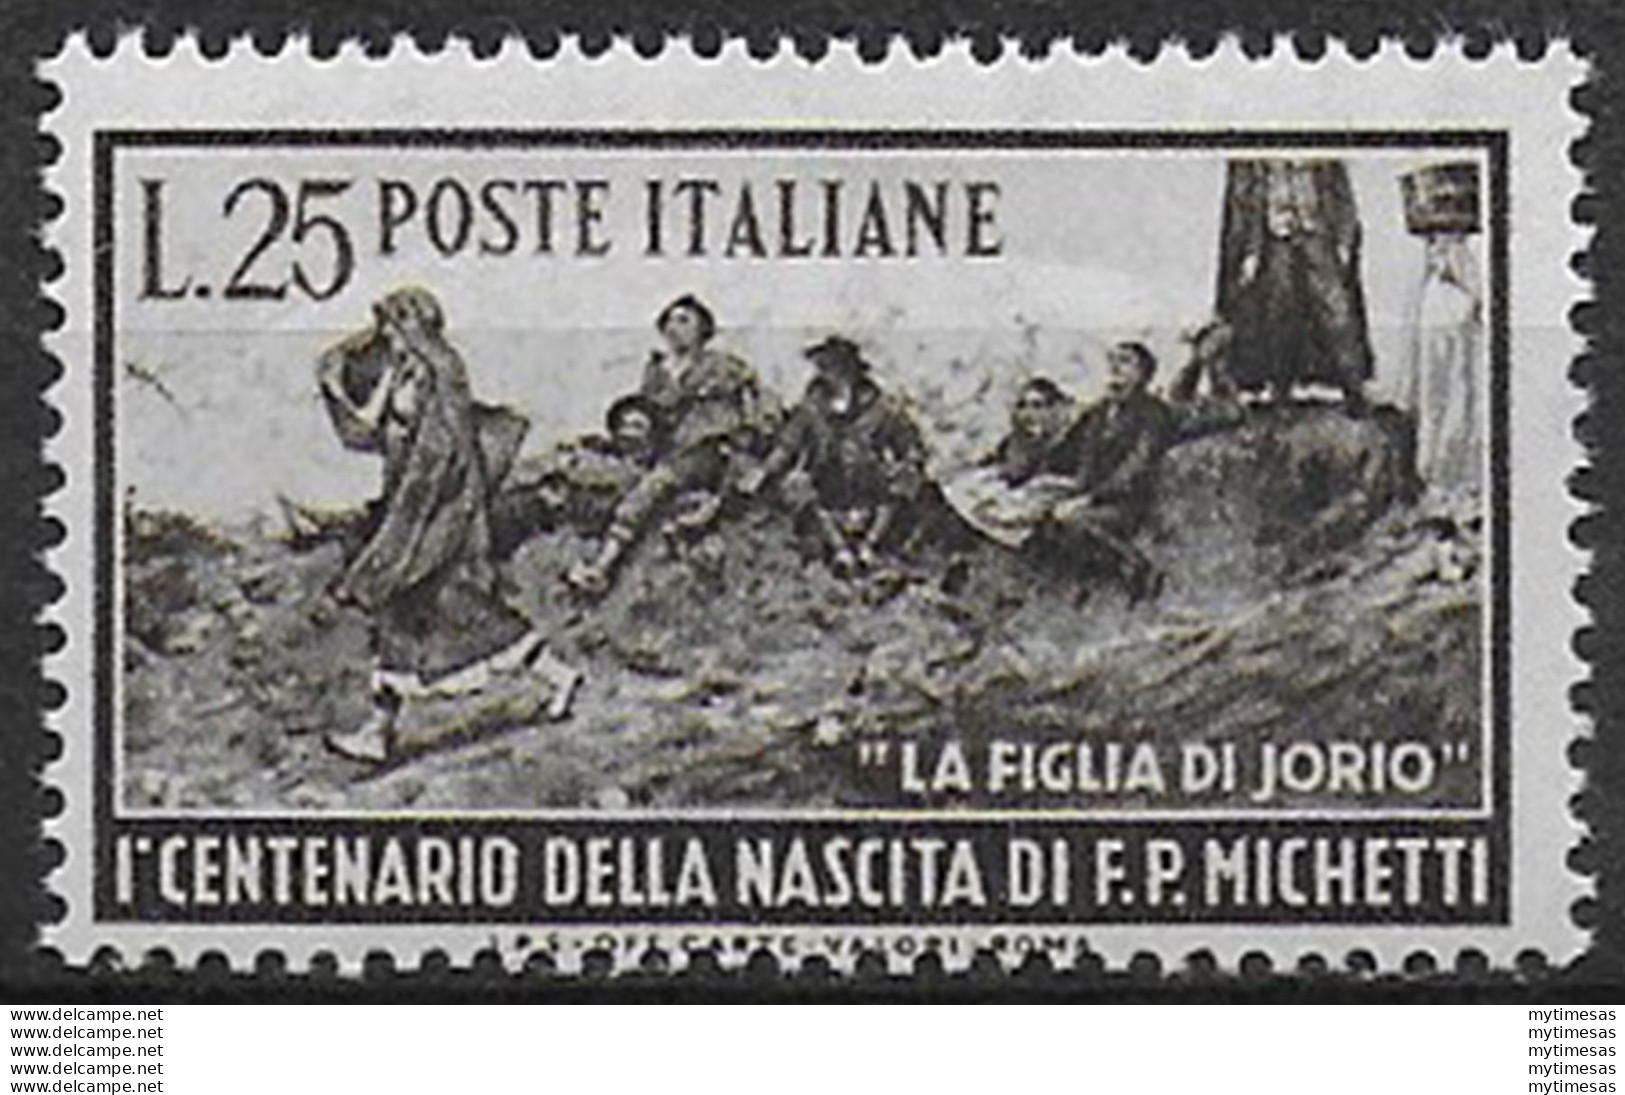 1951 Italia Michetti MNH Sass N. 671 - 1946-60: Mint/hinged